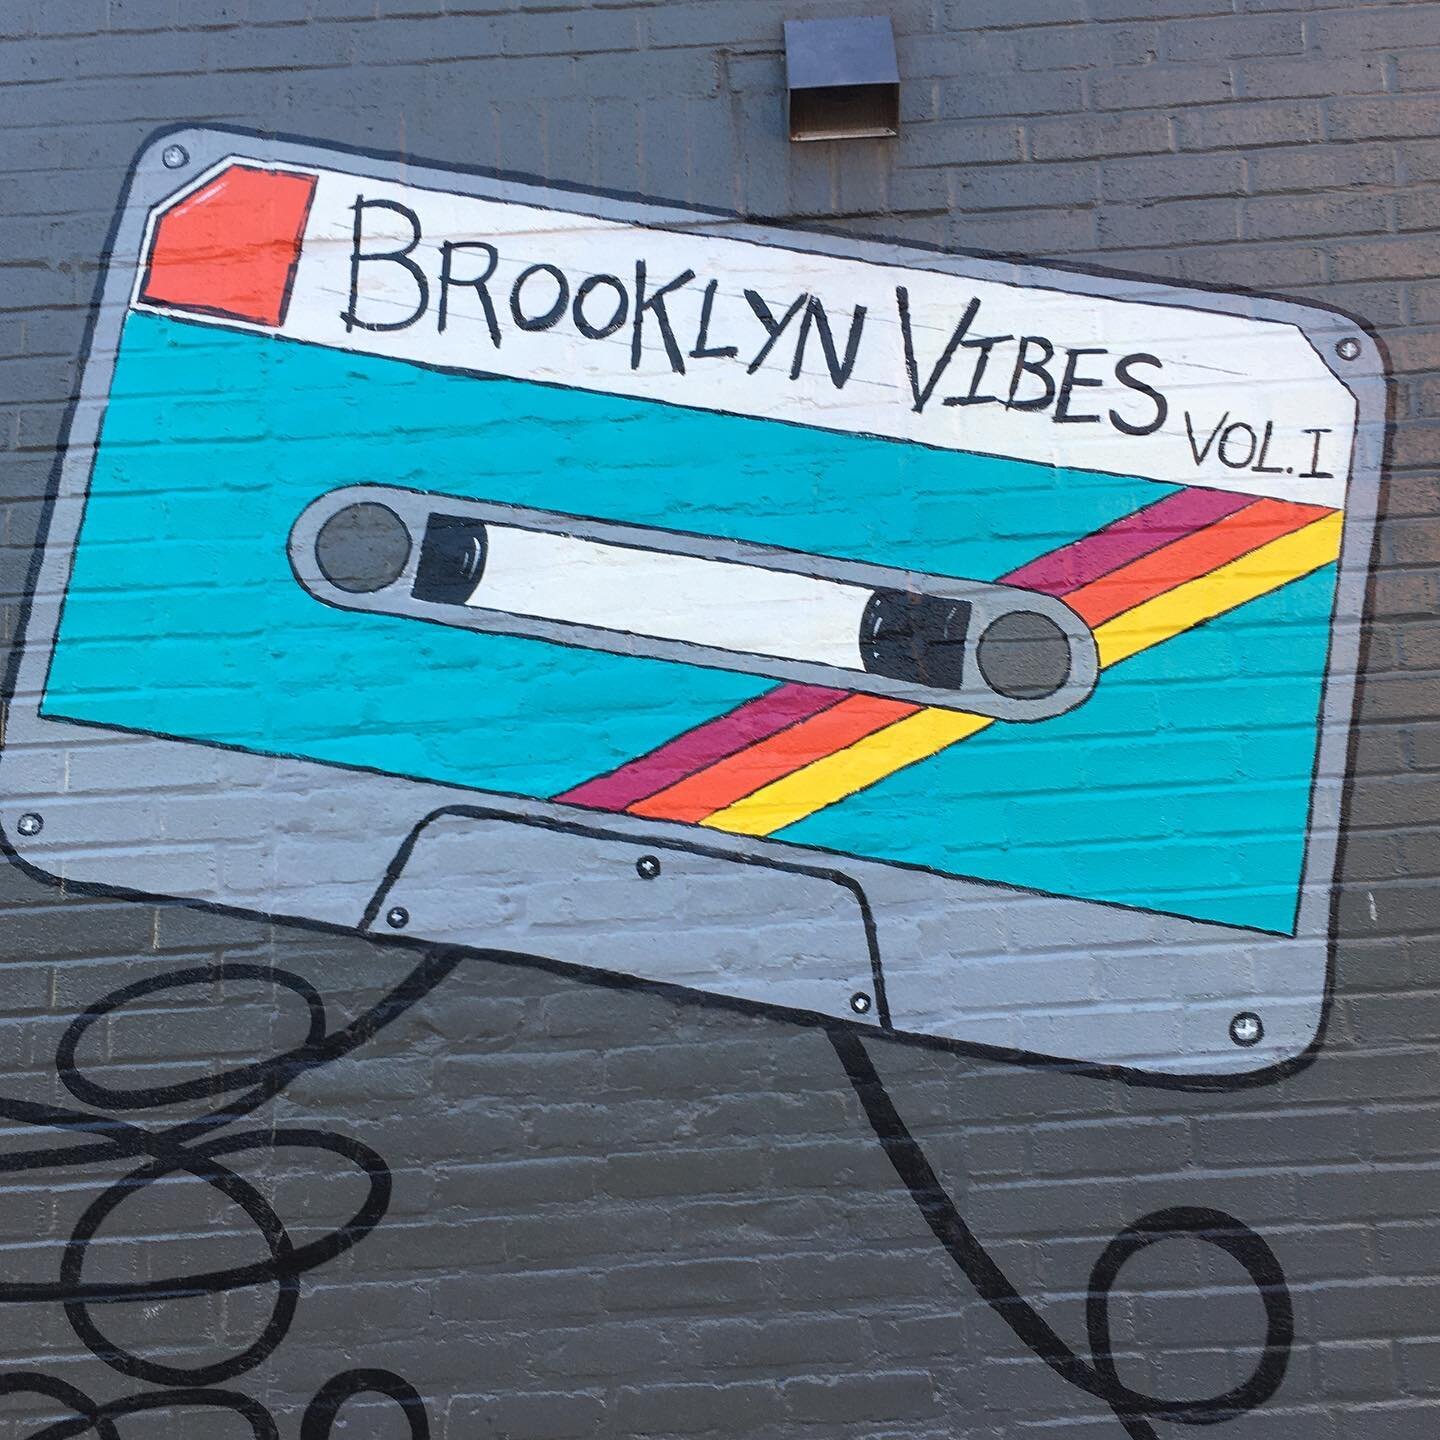 After 20 years in East Village, it&rsquo;s time for a change. Hellloooo Brooklyn!!
.
#sidewalkwisdom #brooklyn #freshstar #2020 #moving #brooklynvibes